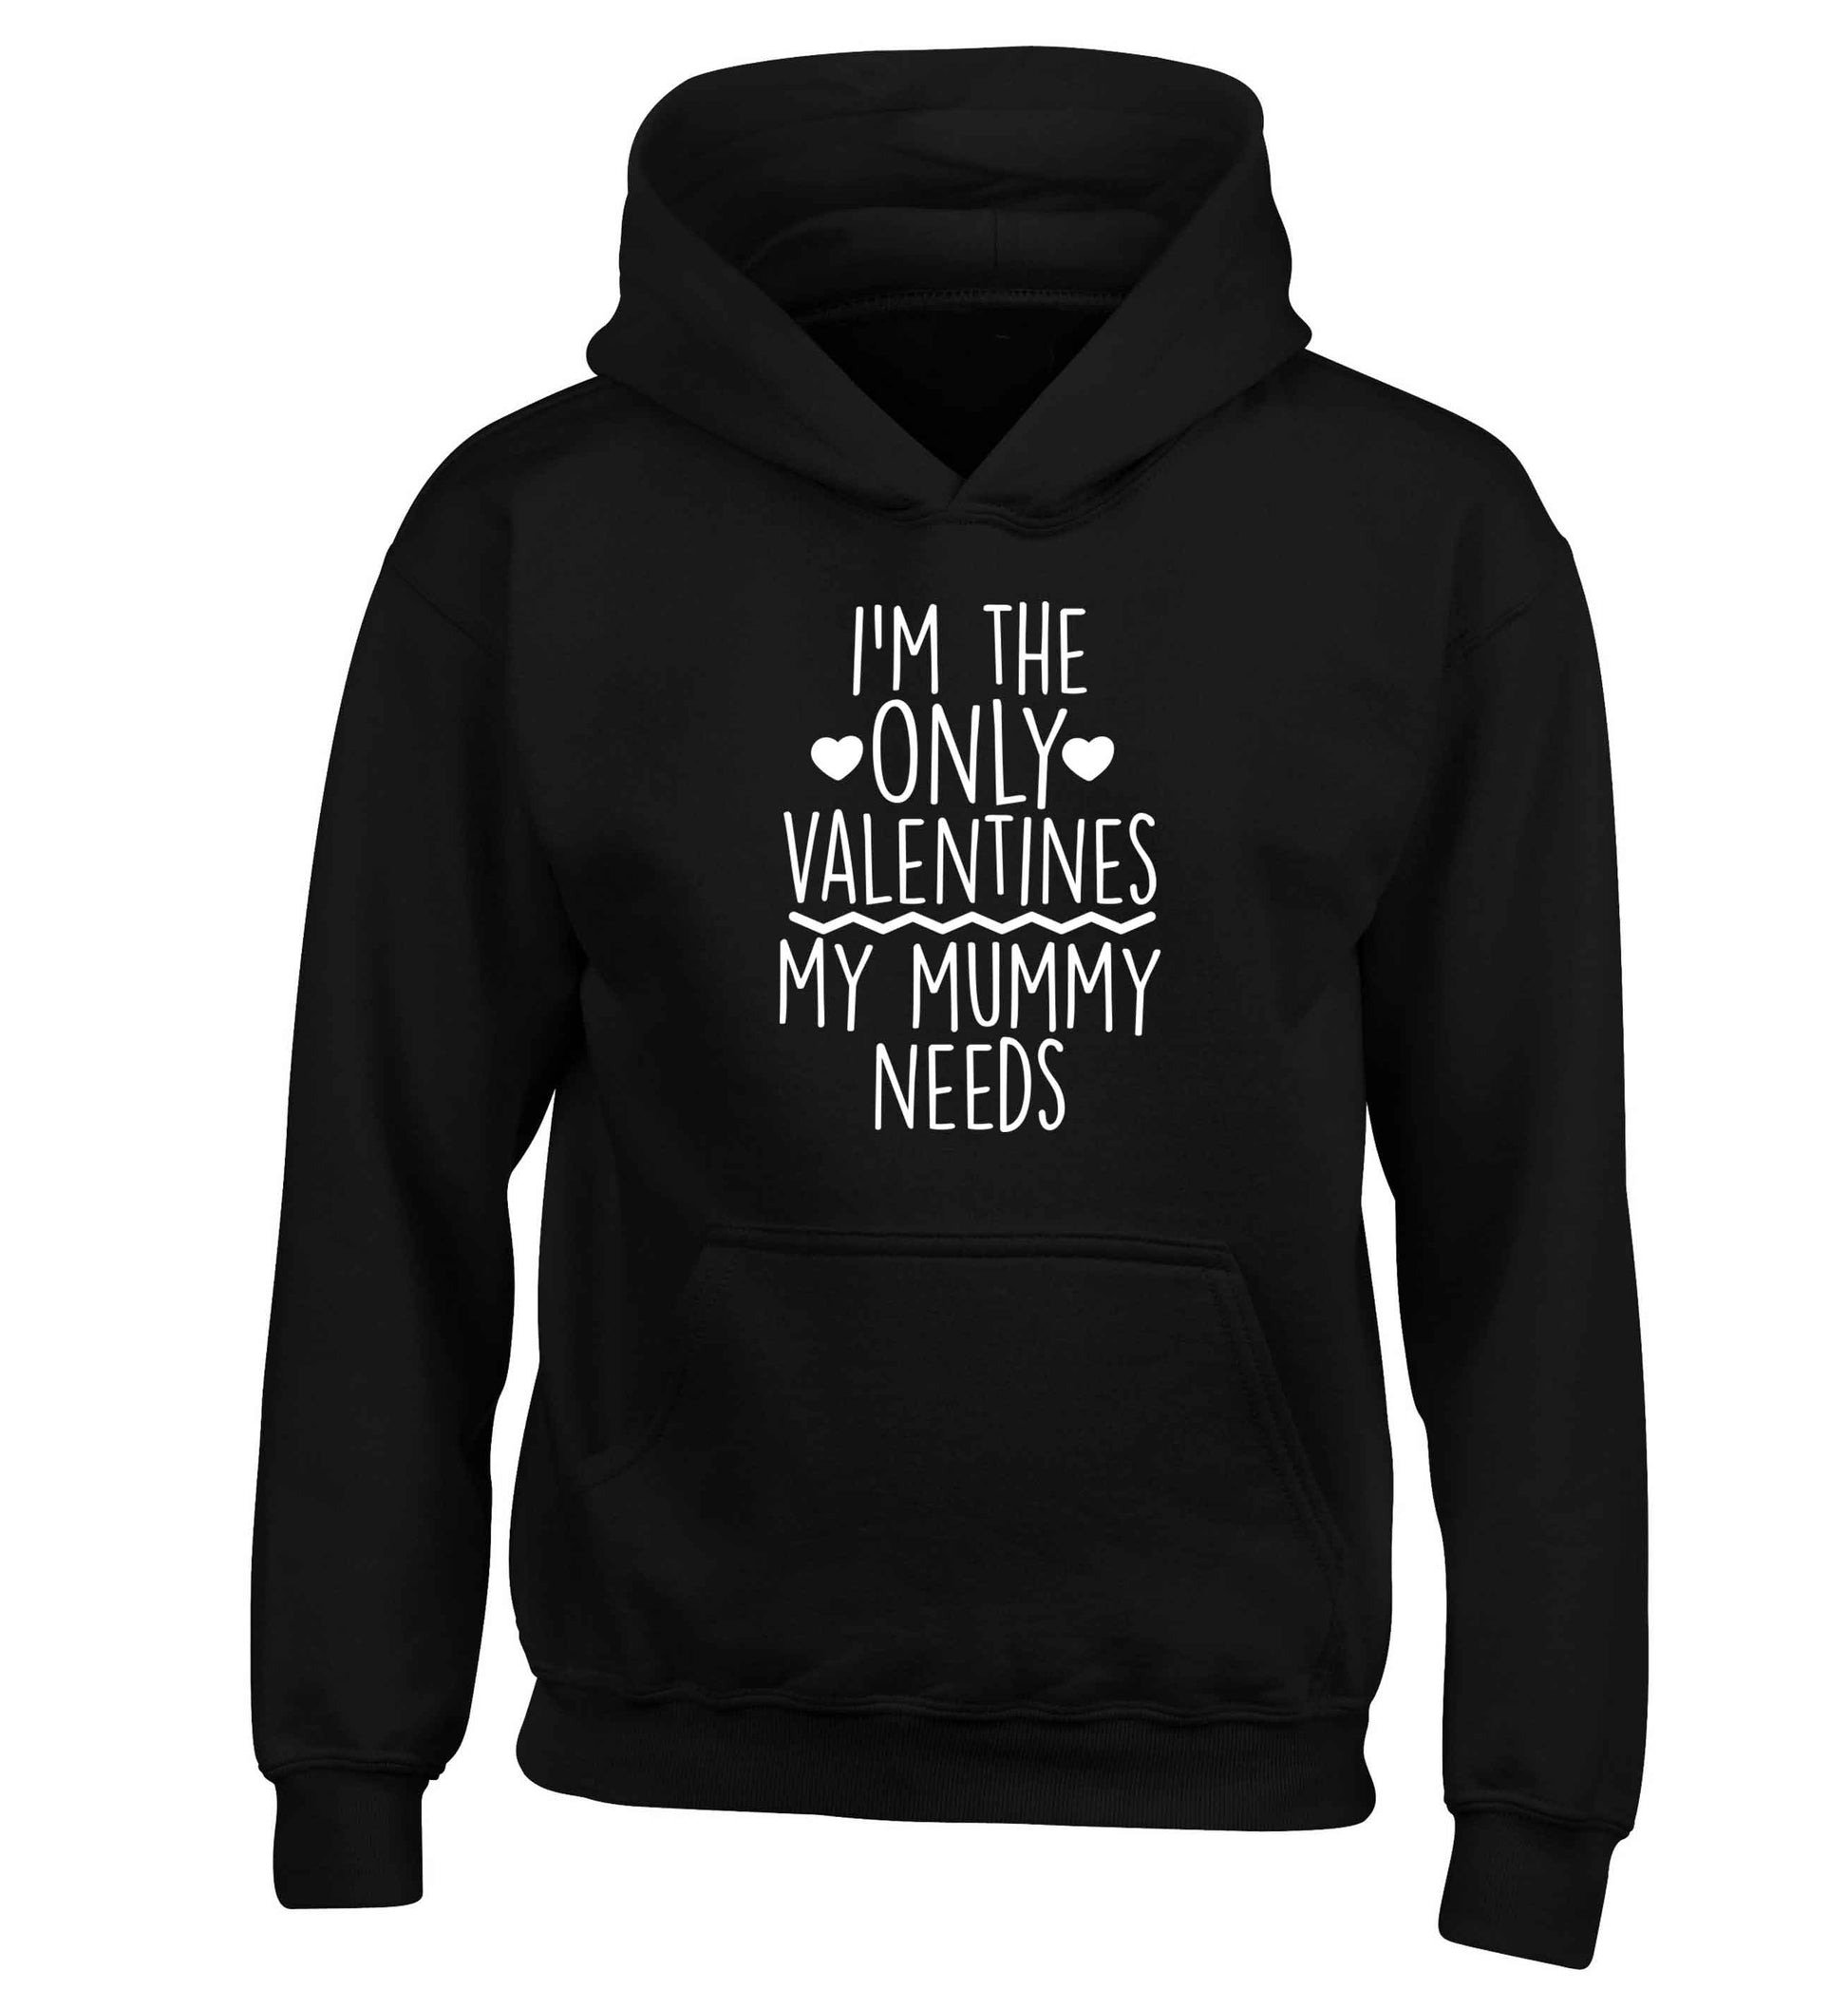 I'm the only valentines my mummy needs children's black hoodie 12-13 Years